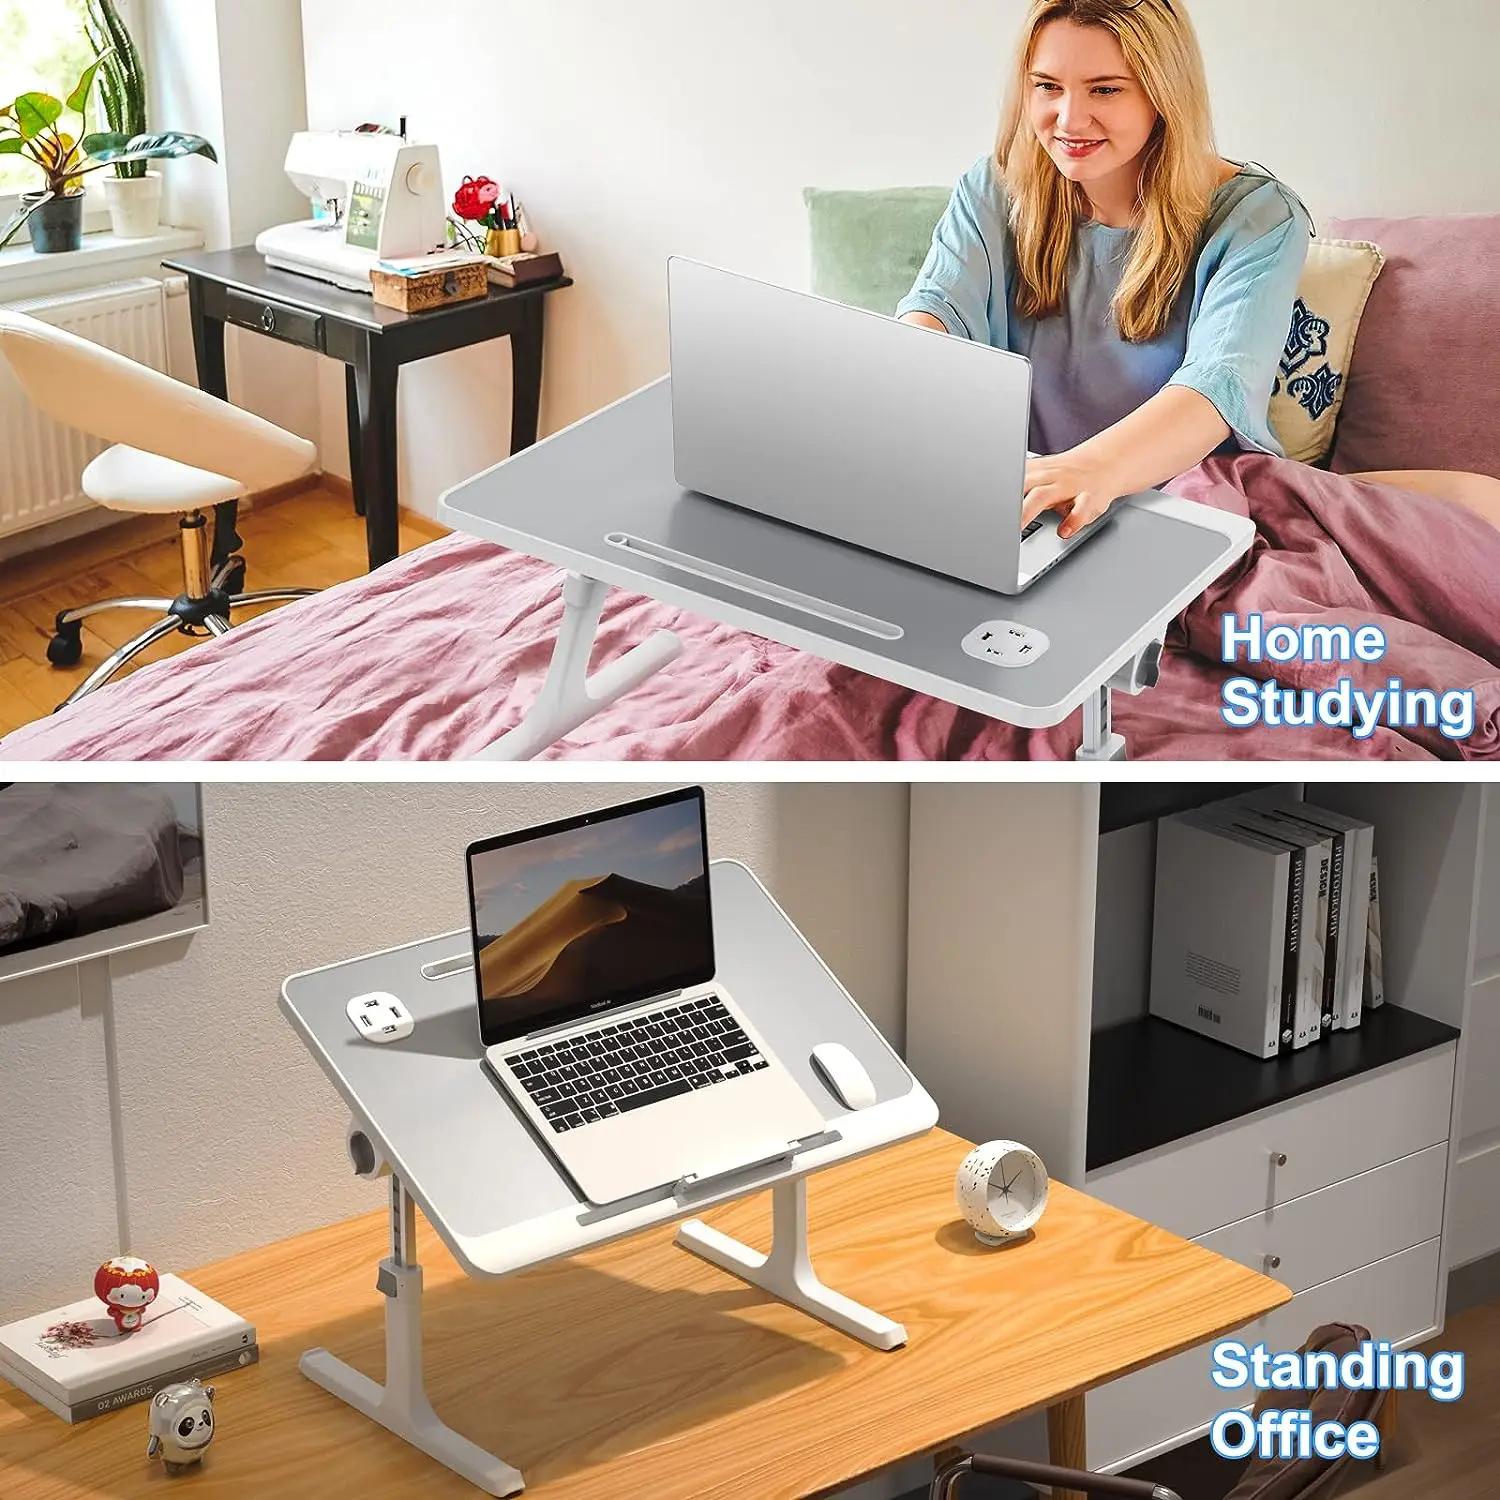 https://ae01.alicdn.com/kf/S43acd8f9f96e42fda9646c0c1faa70d90/Laptop-Desk-for-Bed-Height-Adjustable-Laptop-Bed-Desk-with-Drawer-Book-Stand-USB-Fan-Light.jpg